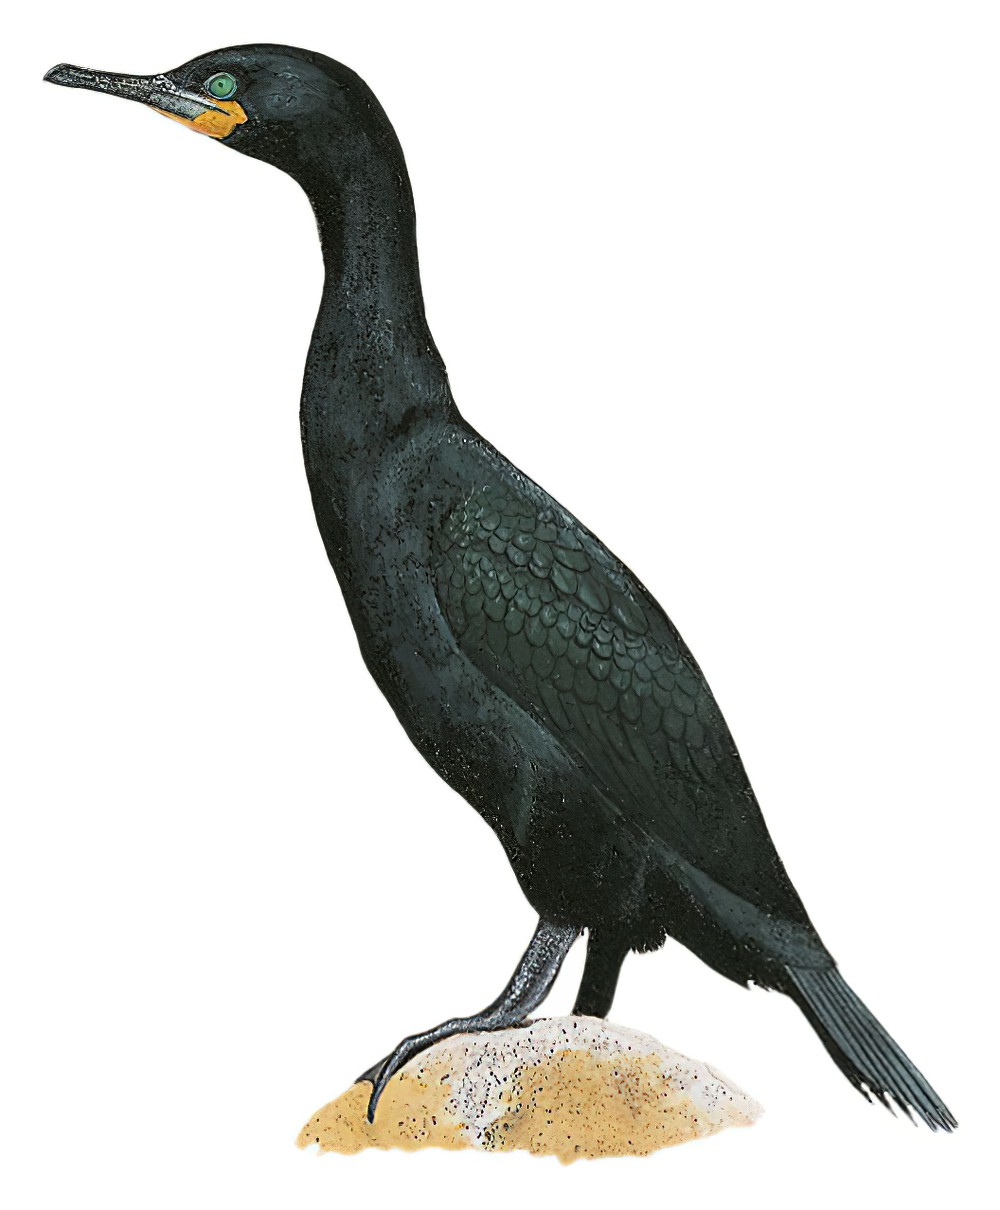 Cape Cormorant / Phalacrocorax capensis